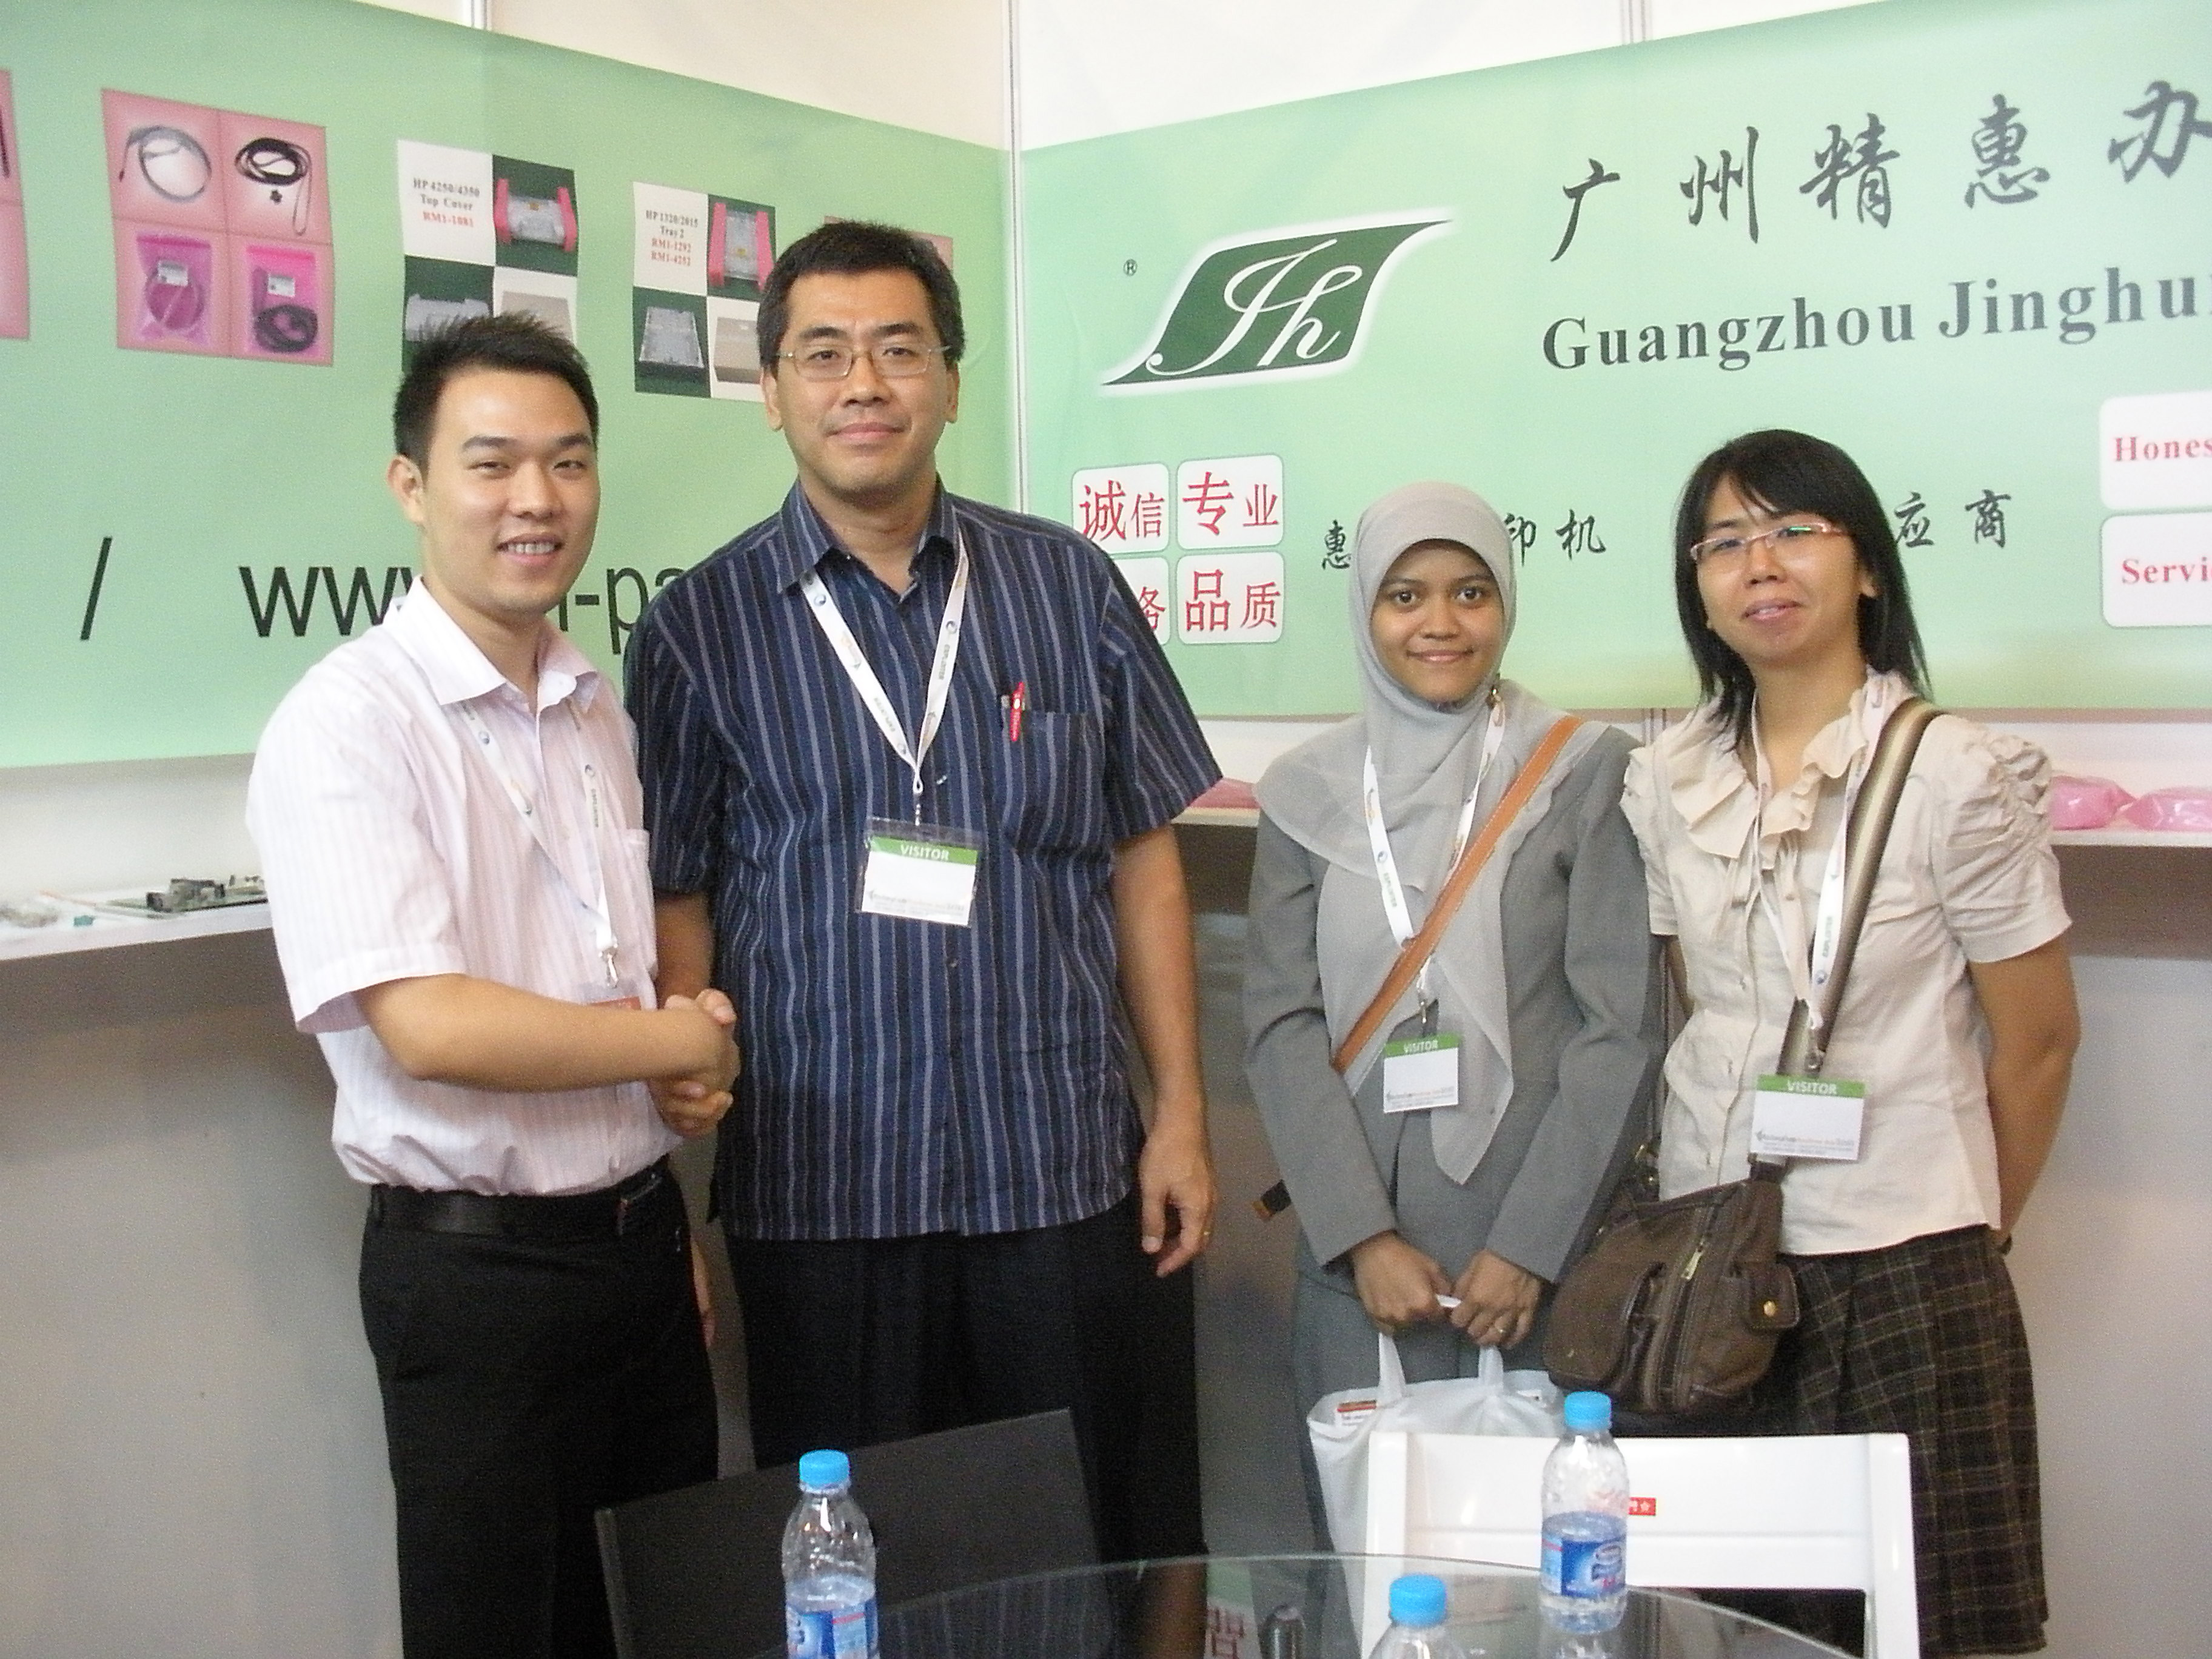 Guangzhou Jinghui Printer Parts RechargExpo South East 2011 in Indonesia